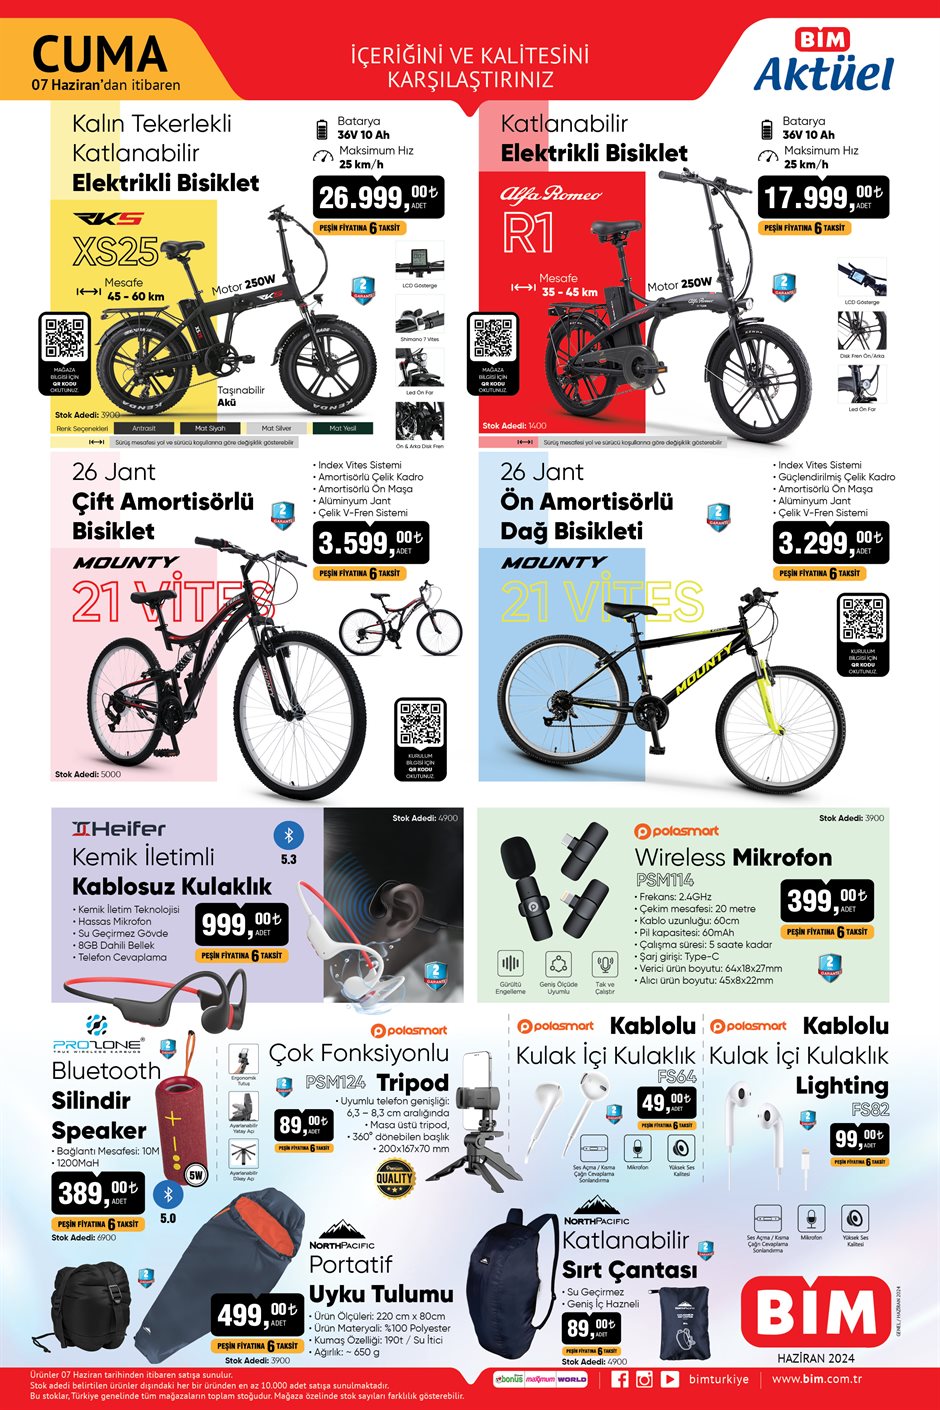 7 Haziran Cuma Bi̇m Katalog Aksiyon Kamera, Kompresör... Bi̇m’de Bu Hafta Cuma Elektrikli Bisiklet 17,999 Tl Kaçmaz Fiya (5)